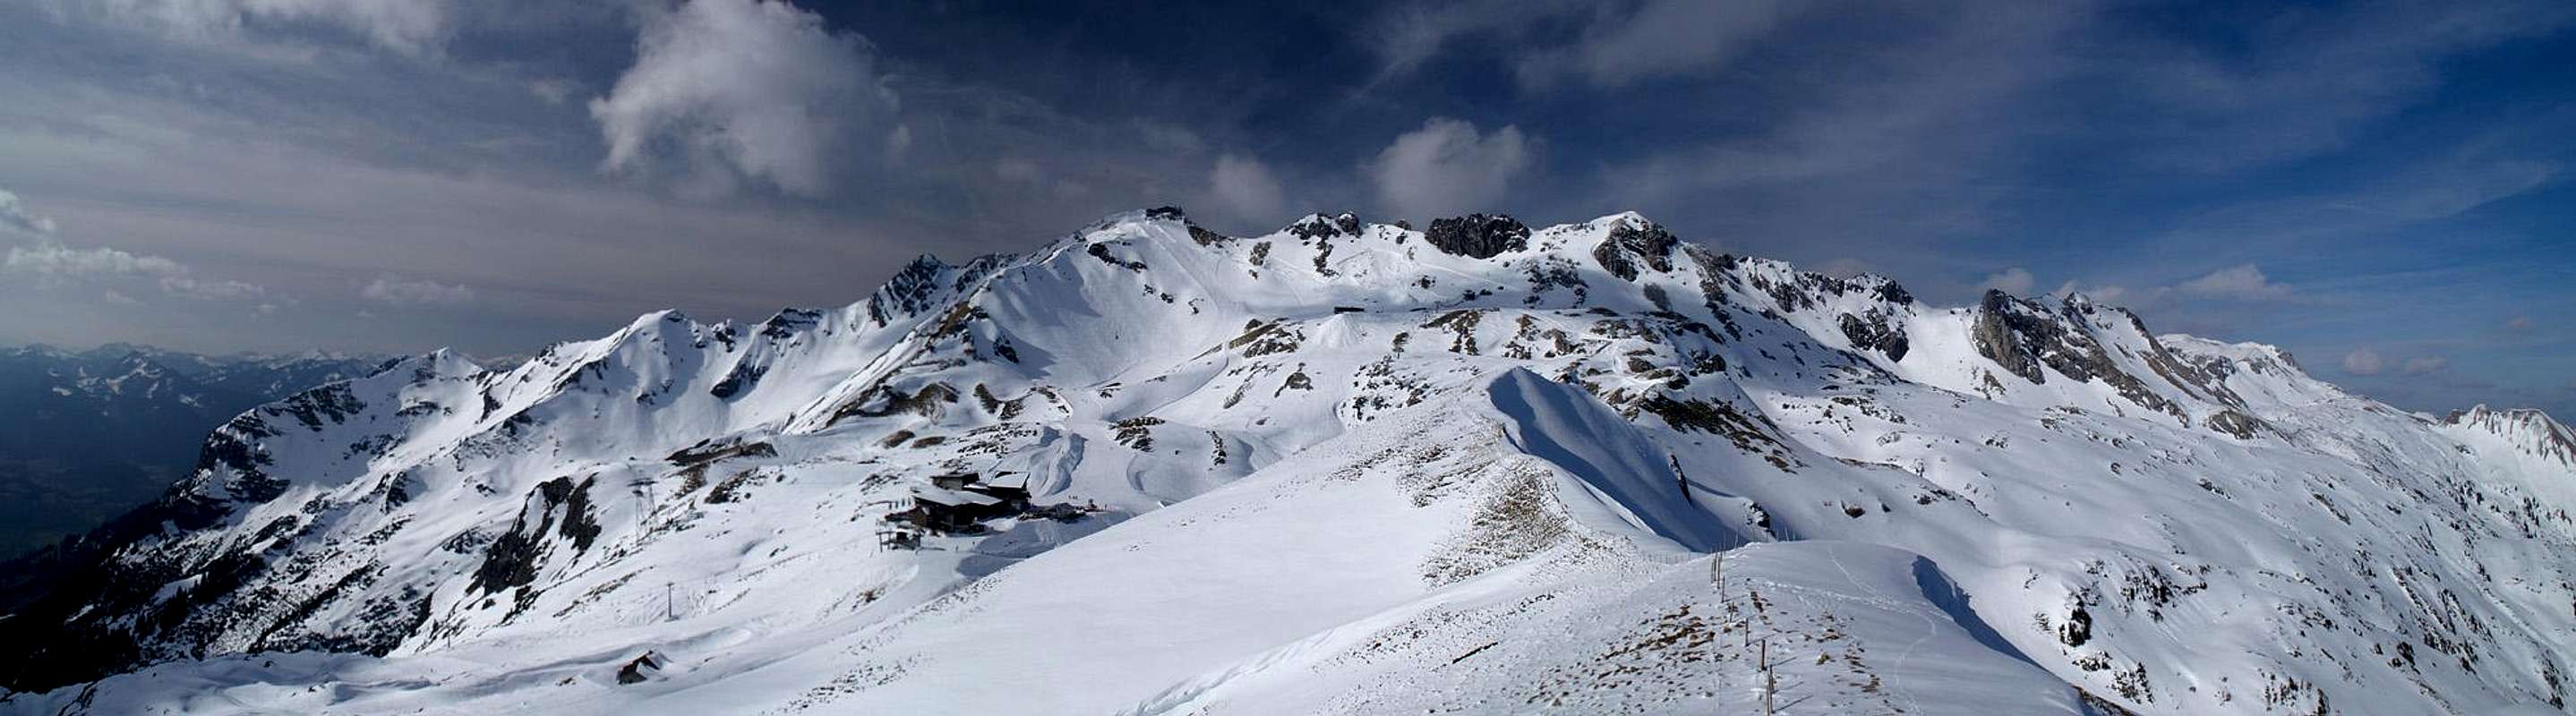 Nebelhorn : Climbing, Hiking & Mountaineering : SummitPost